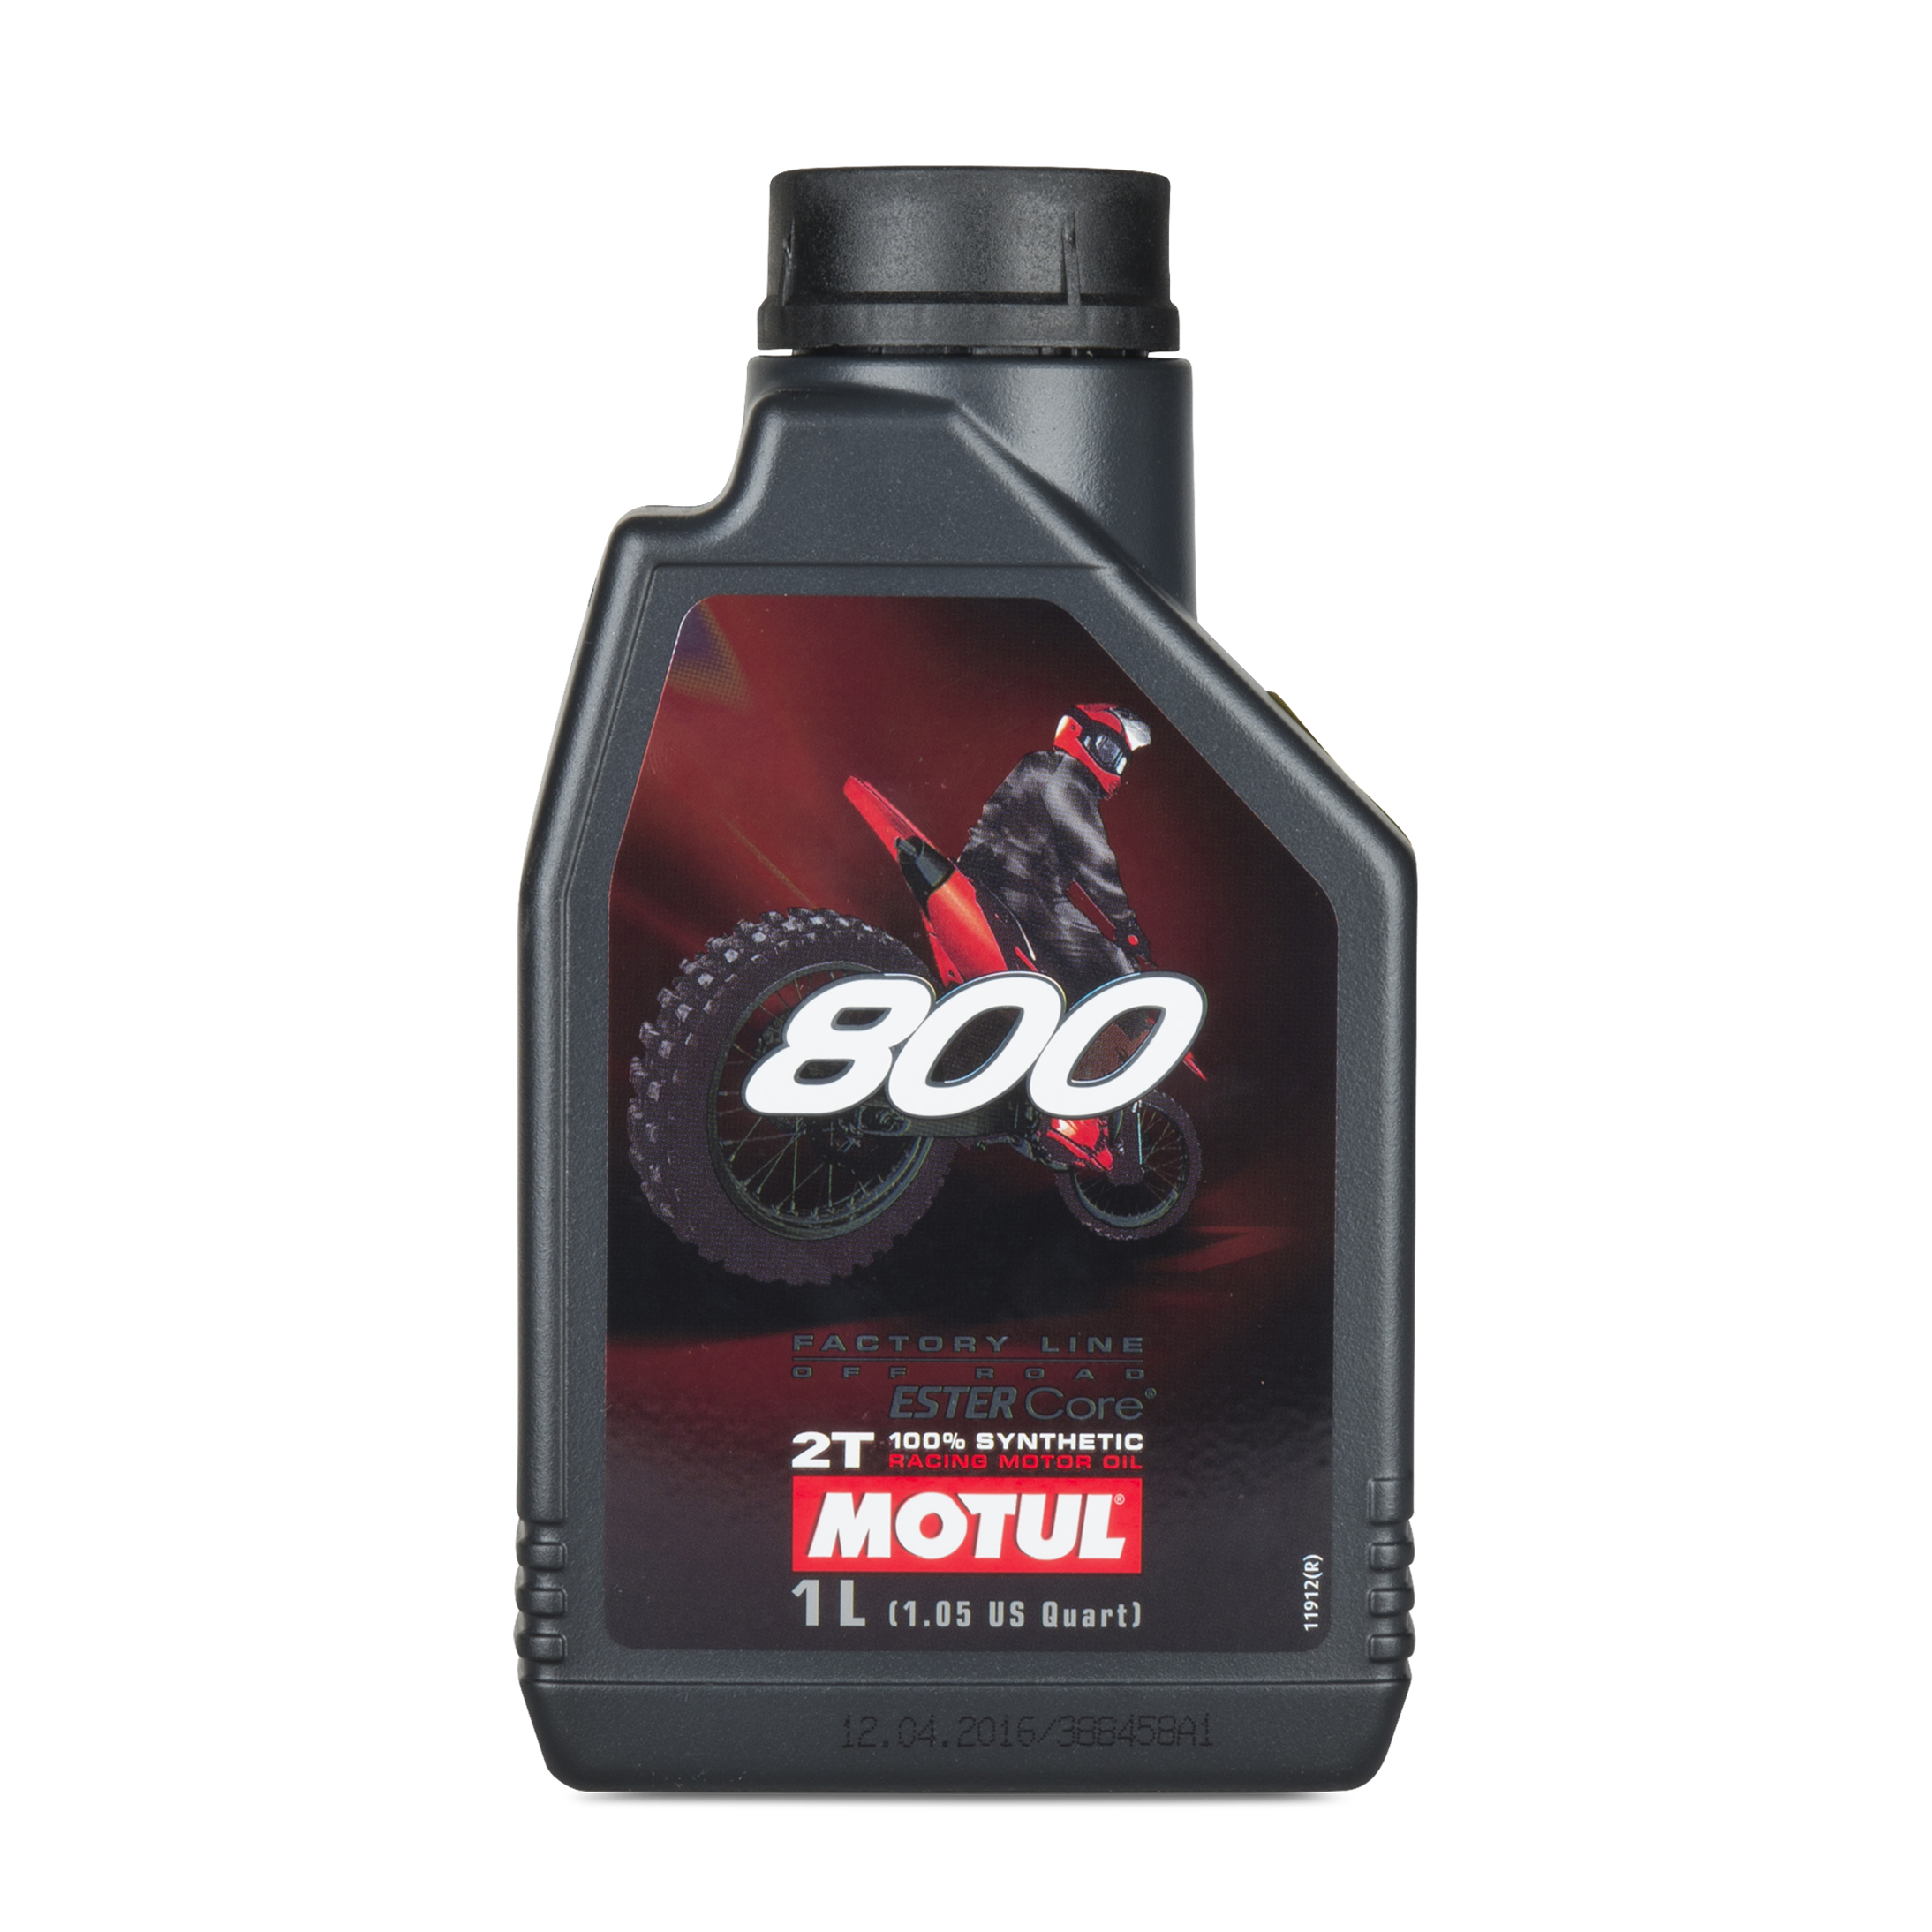 Motul 800 Offroad 2T 1L Oil Fully synthetic - Now 38% Savings